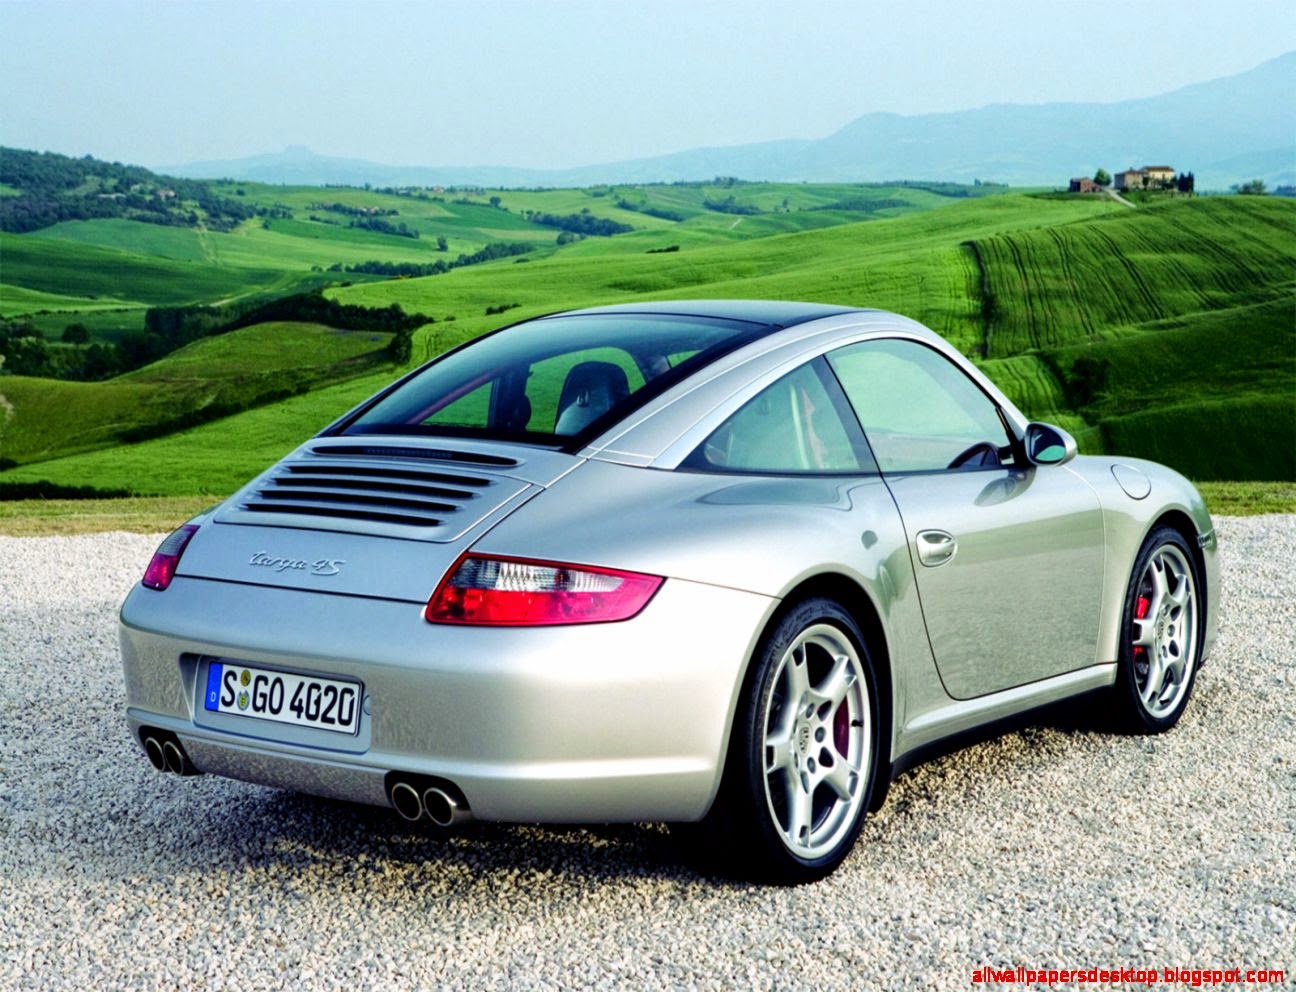 Porsche 911 Targa 4S Gallery & Downloads Porsche  - porsche 911 targa 4s wallpapers